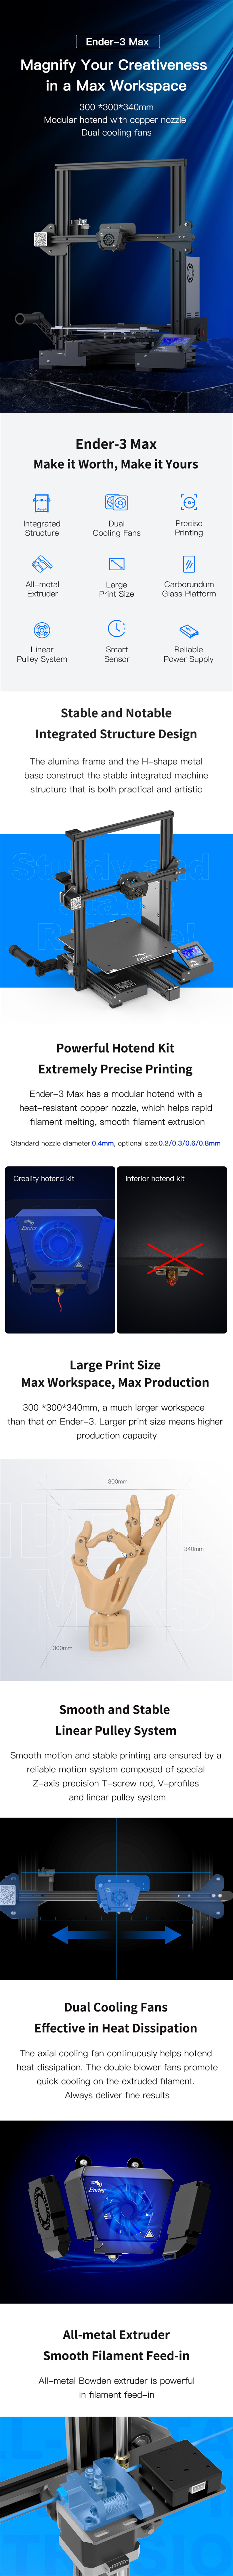 Creality 3D® Ender-3 MAX 3D Printer 300x300x340MM Prinz Size Dual Cooling Fans/All-metal Extruder/Larger Carborundum Glass Platform/Smart Sensor/Relia 7